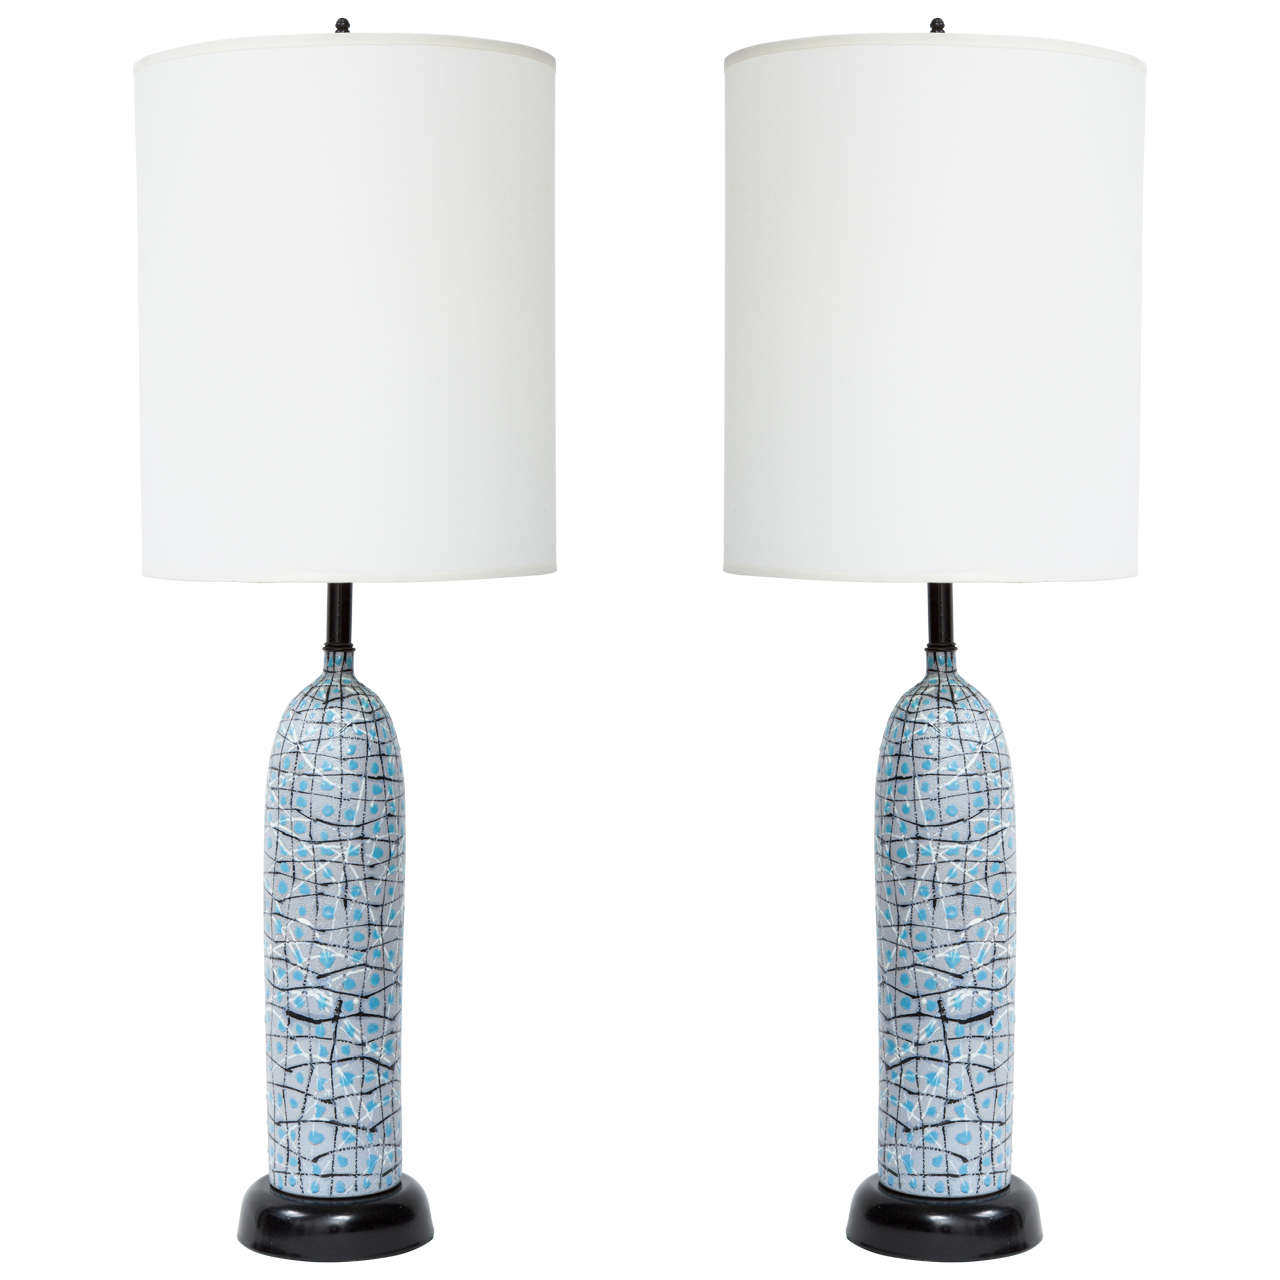 Pair of Italian Graphic Patterned Ceramic Lamps